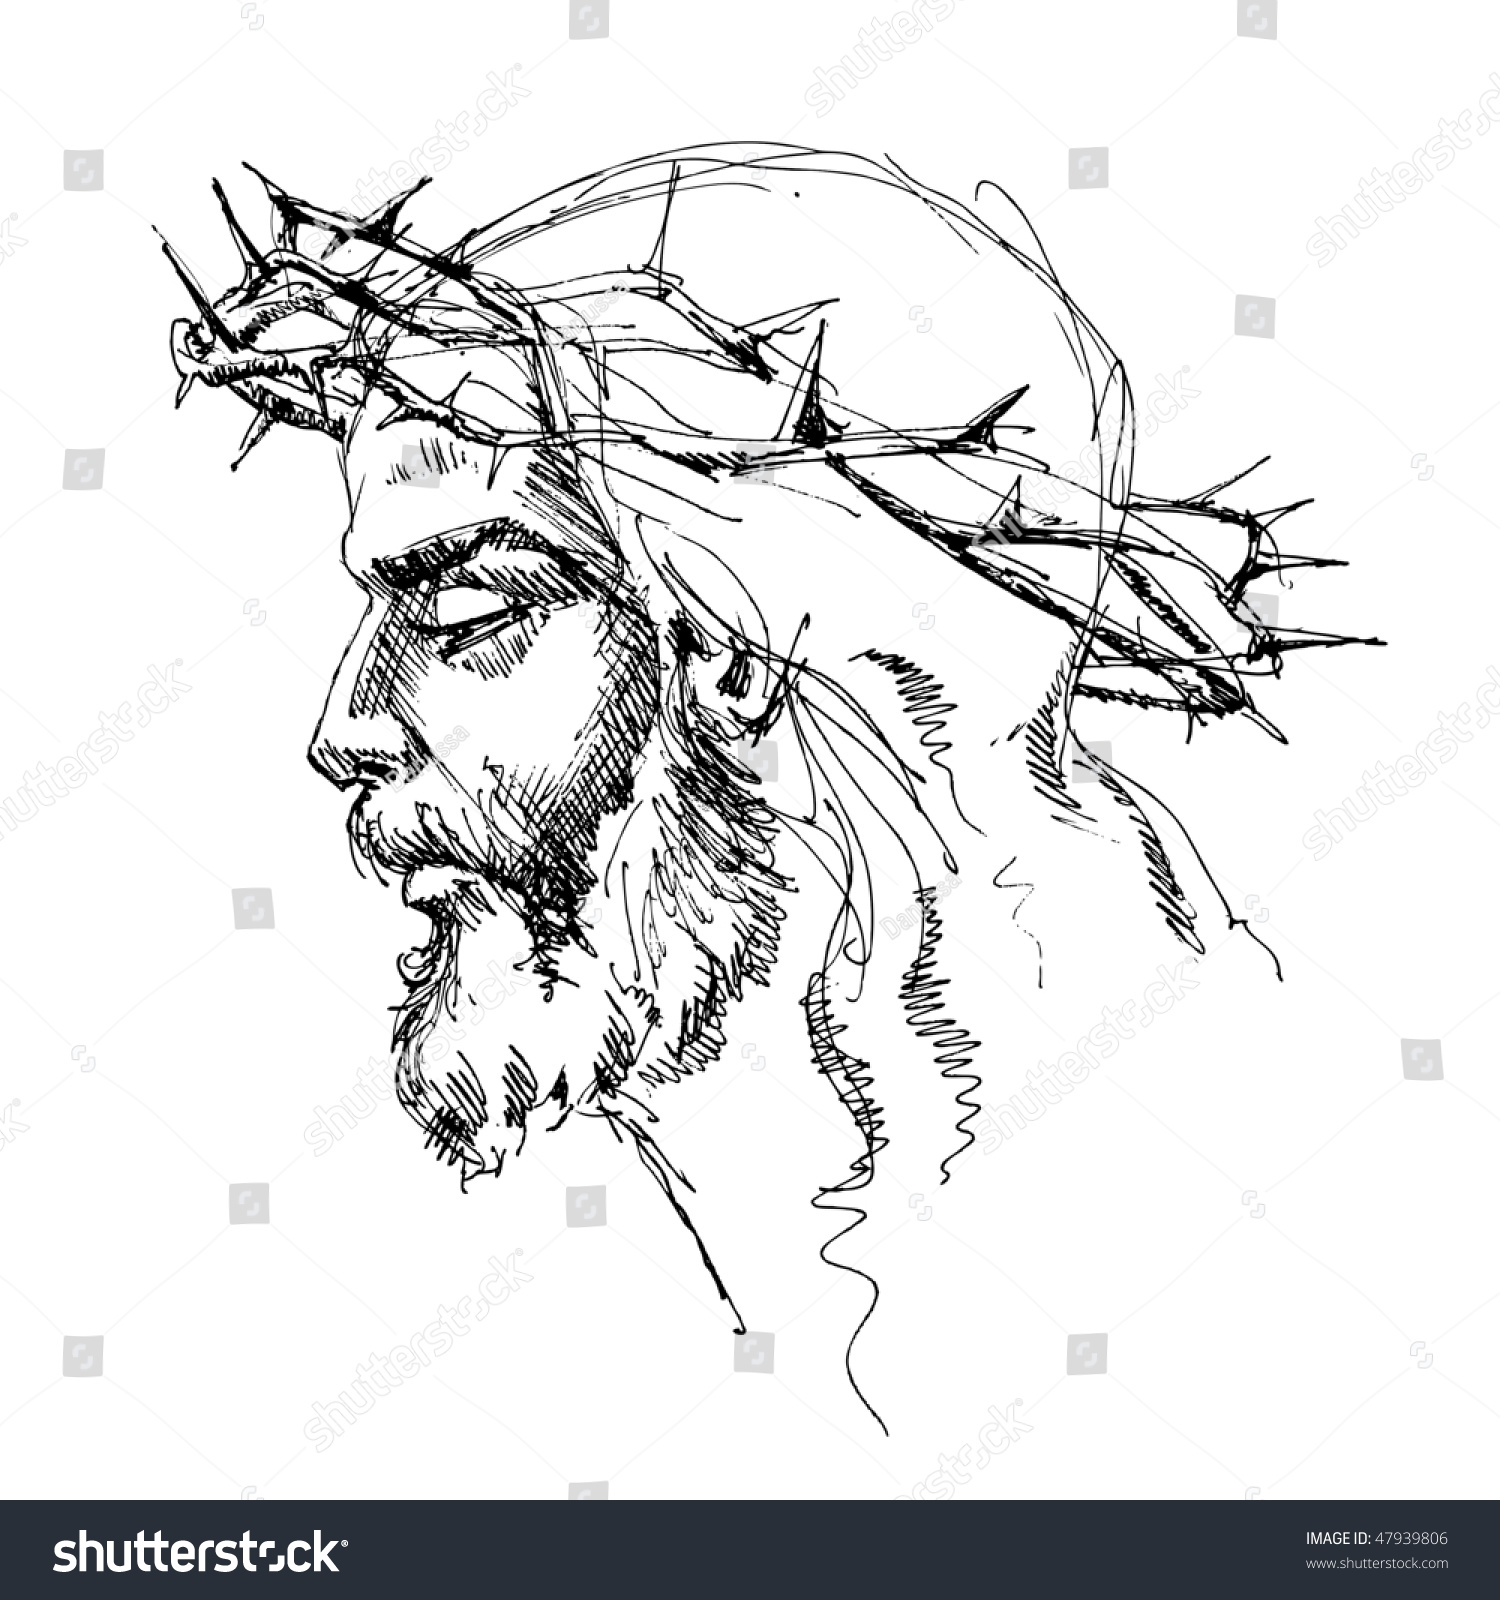 Jesus Christ Crown Thorns Sketch Stock Illustration 47939806 | Shutterstock